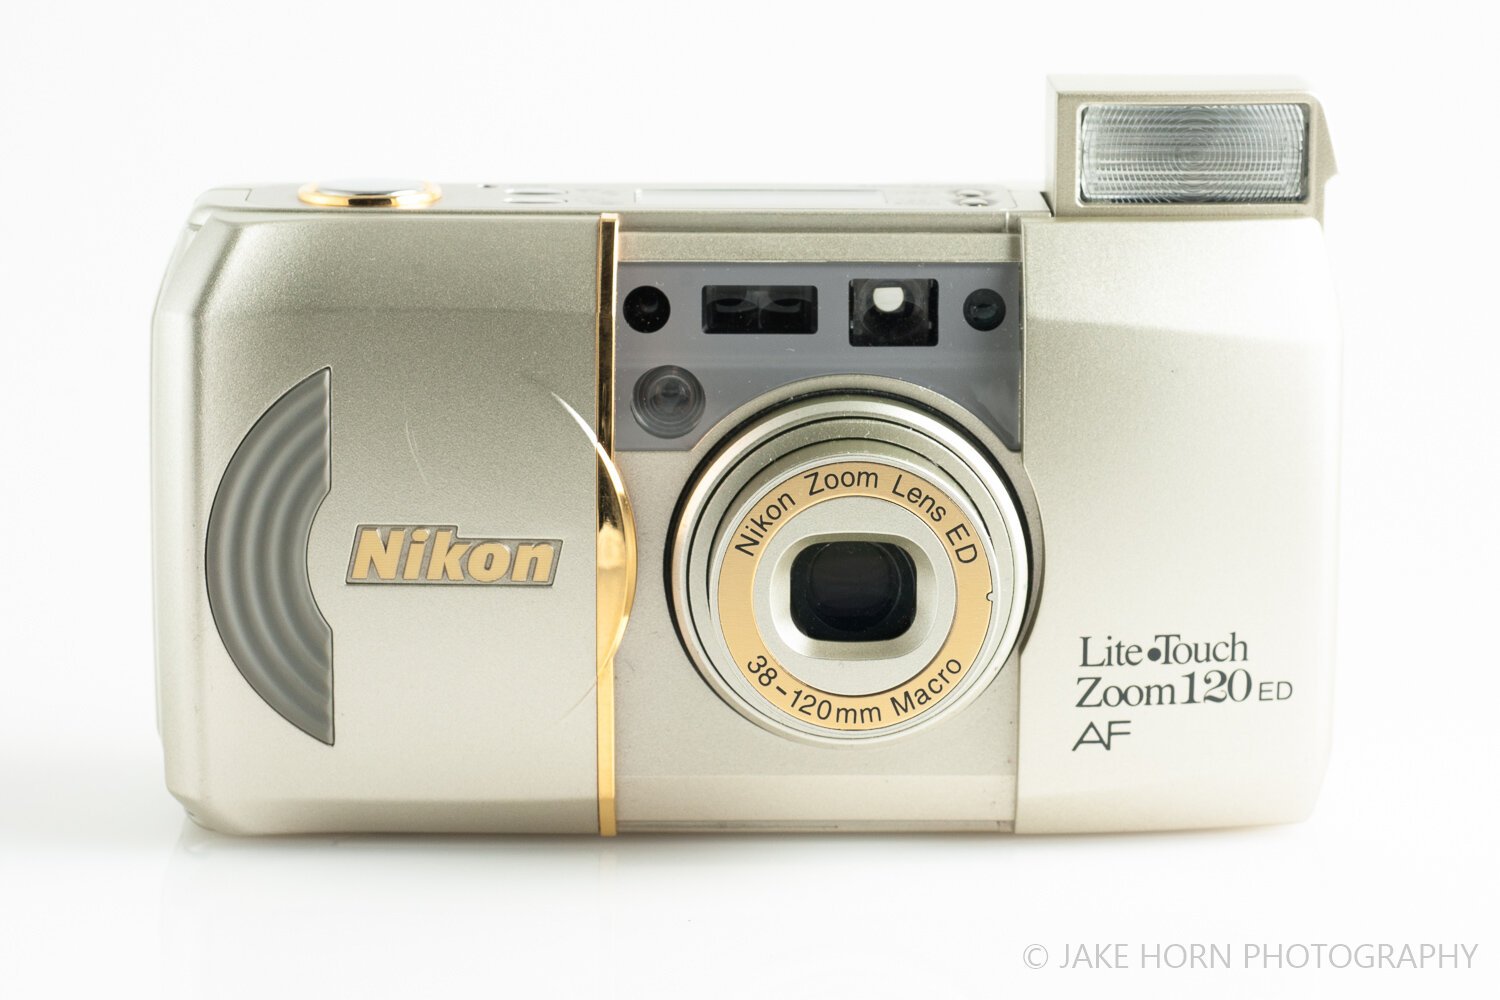 Nikon フィルムカメラ Lite Touch Zoom 120 ED